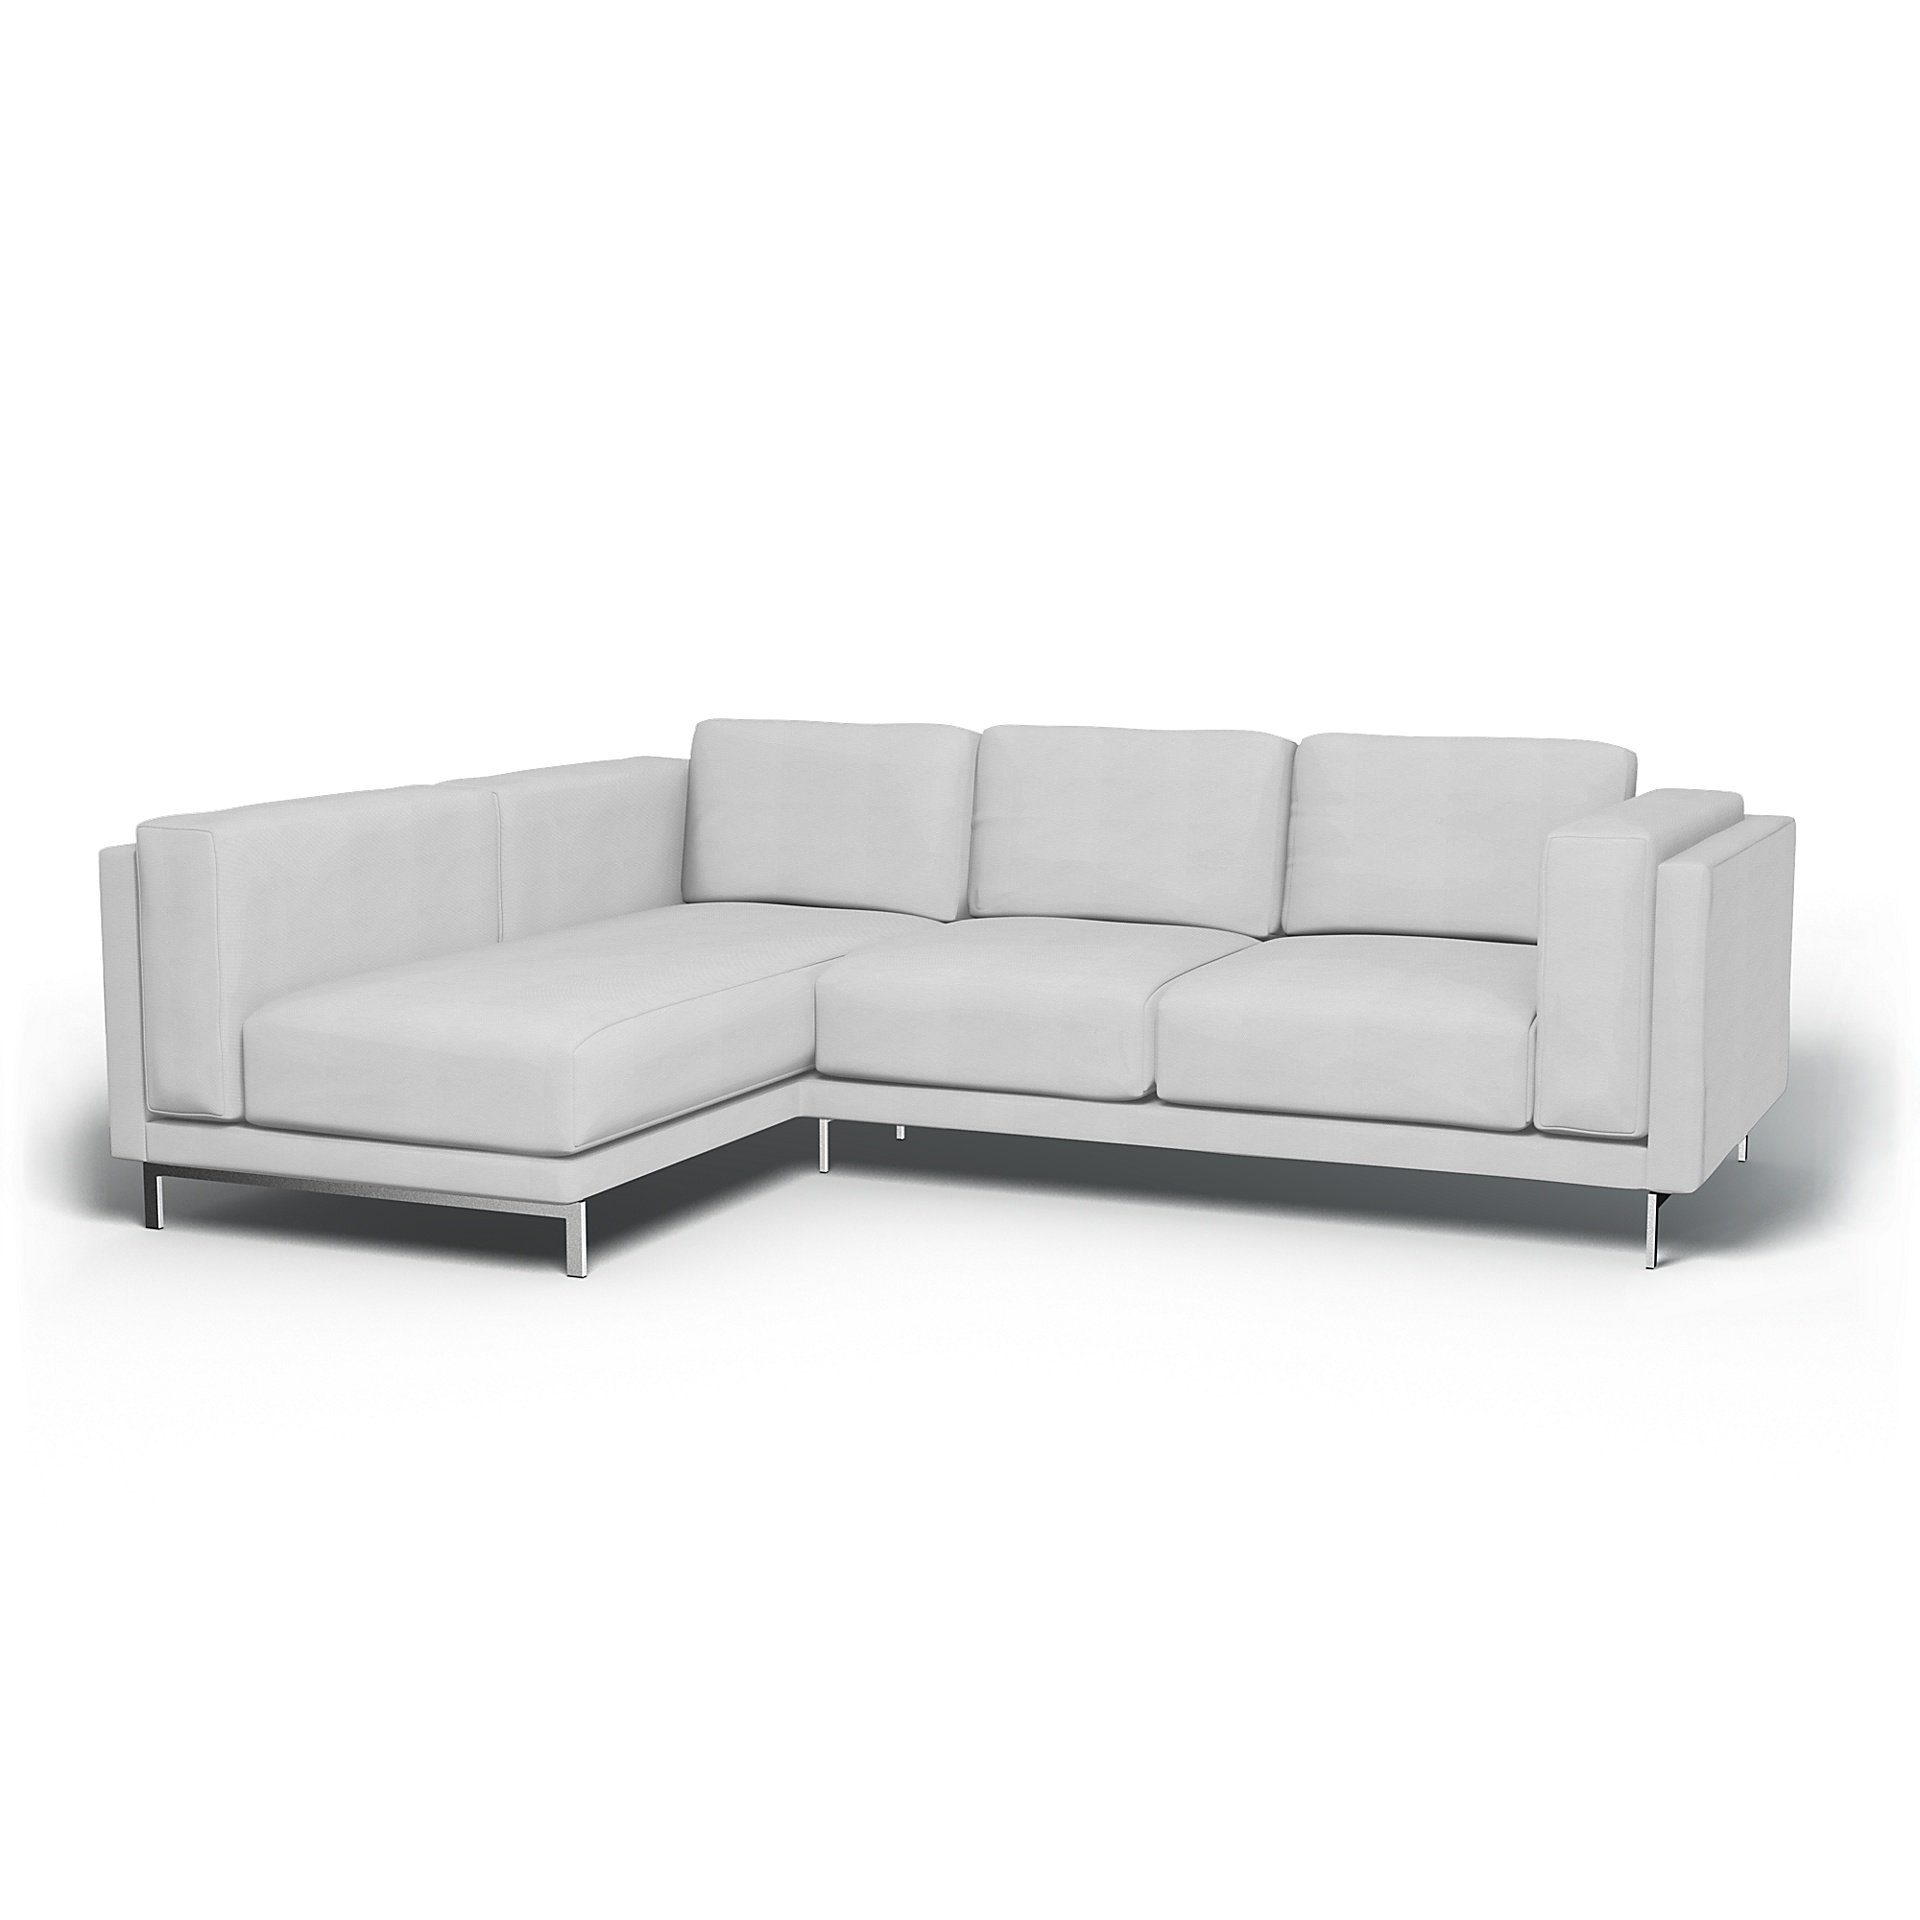 Risane orange NEU & OVP IKEA Husse Bezug Nockeby 2er Sofa mit Recamiere links 